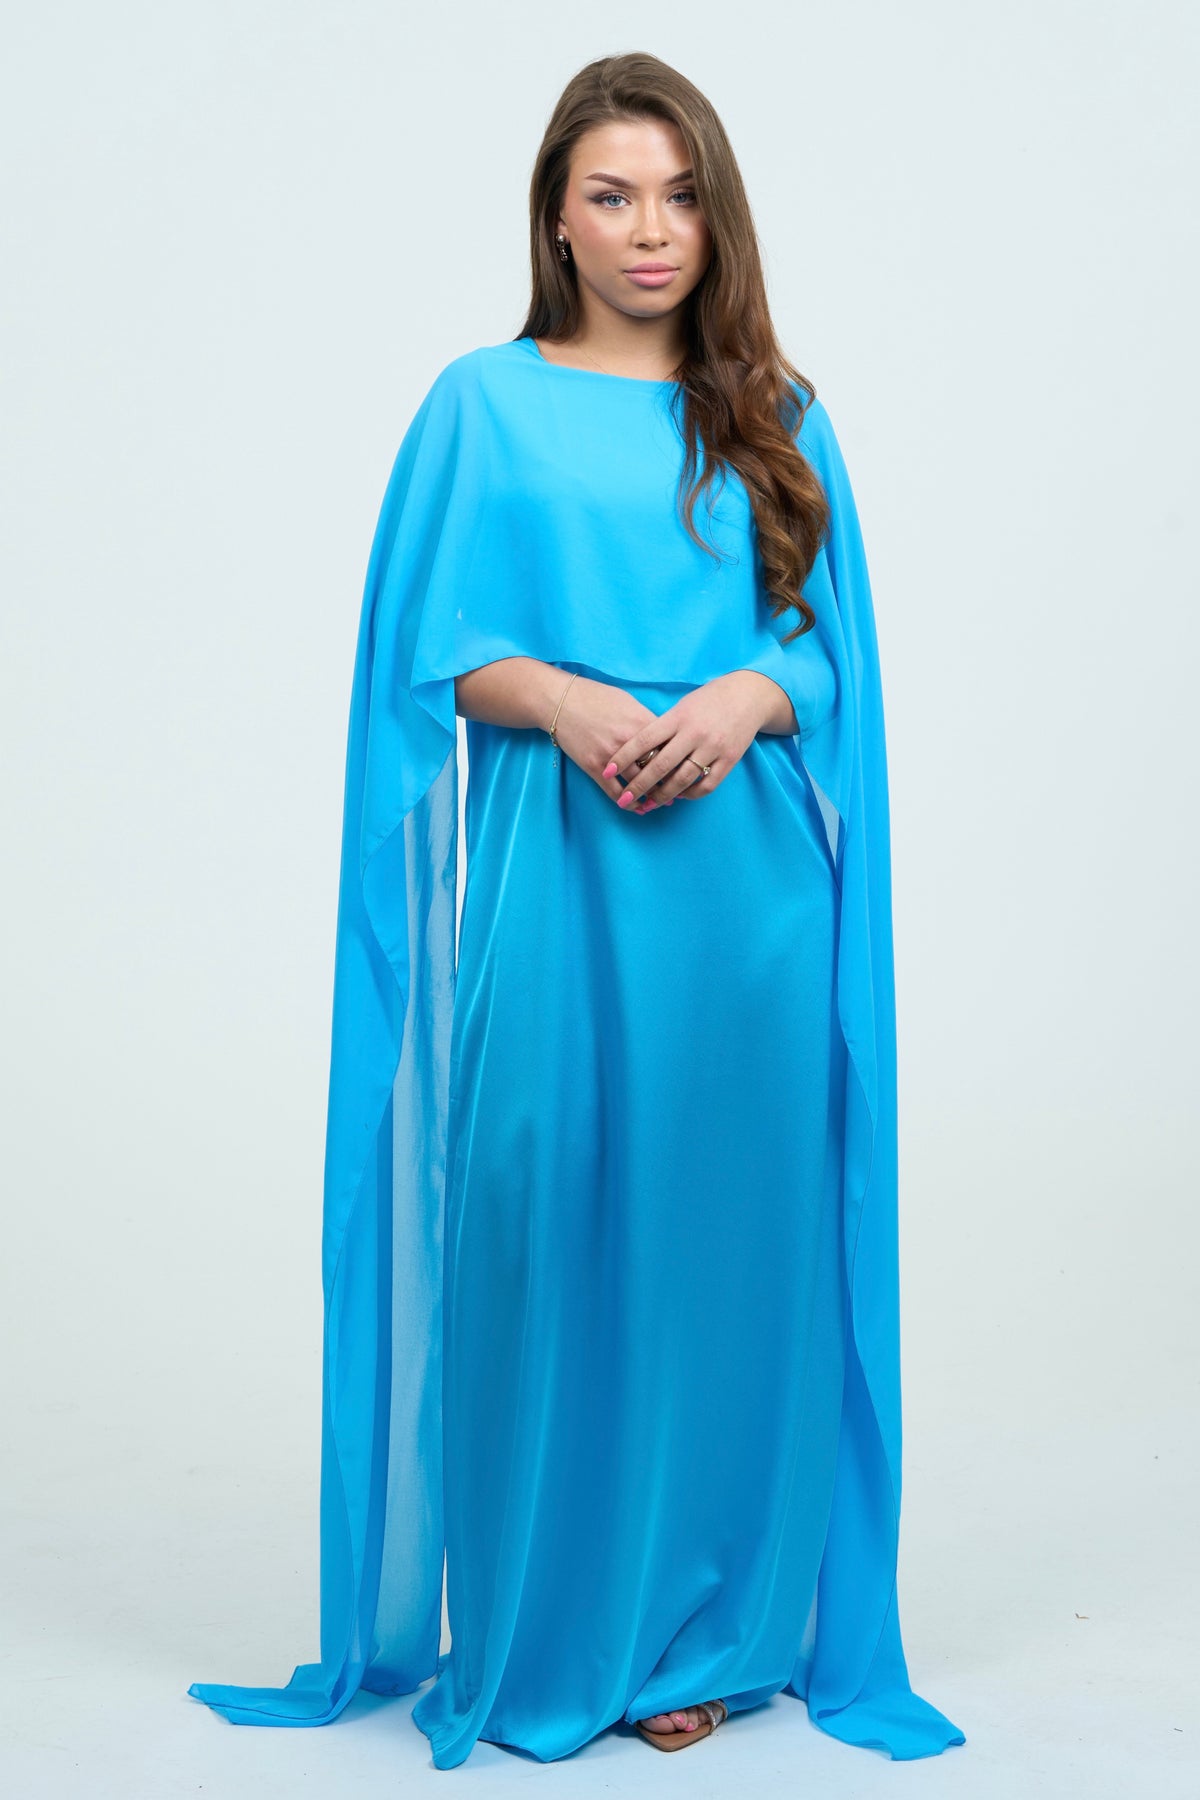 Aqua Blue Dubai Dress | Sleeveless Satin Dress